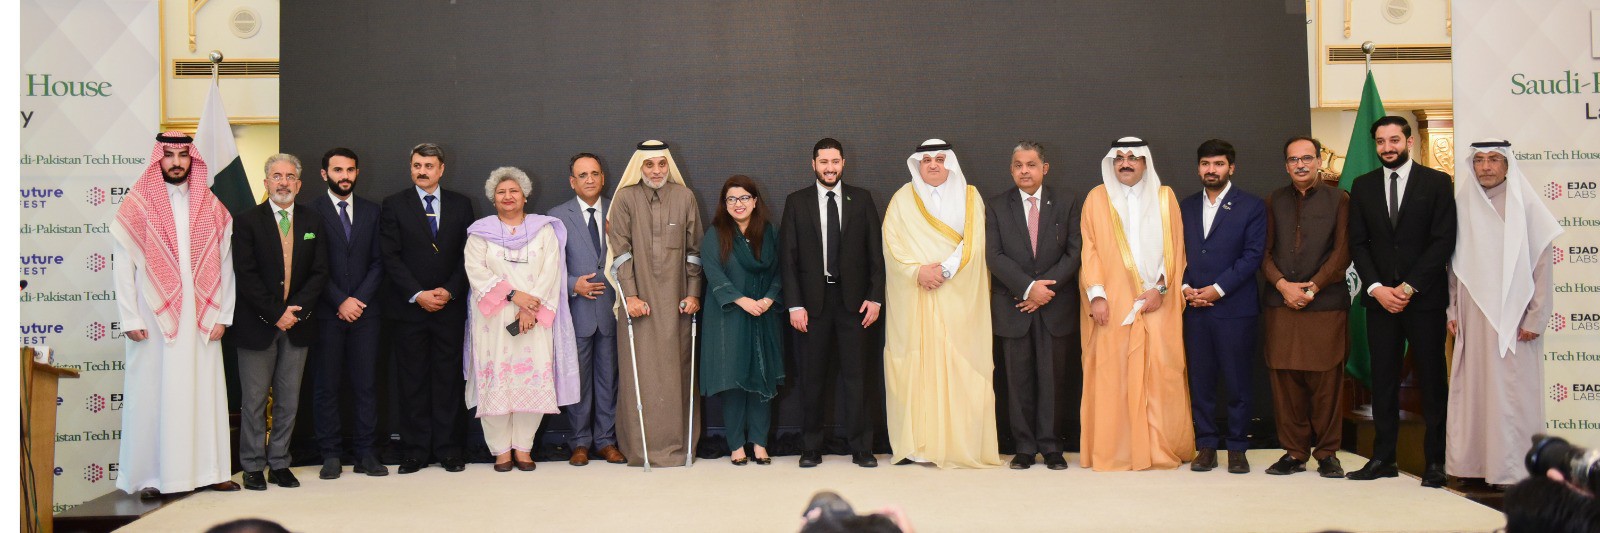 Launching ceremony of Saudi-Pakistan Tech House